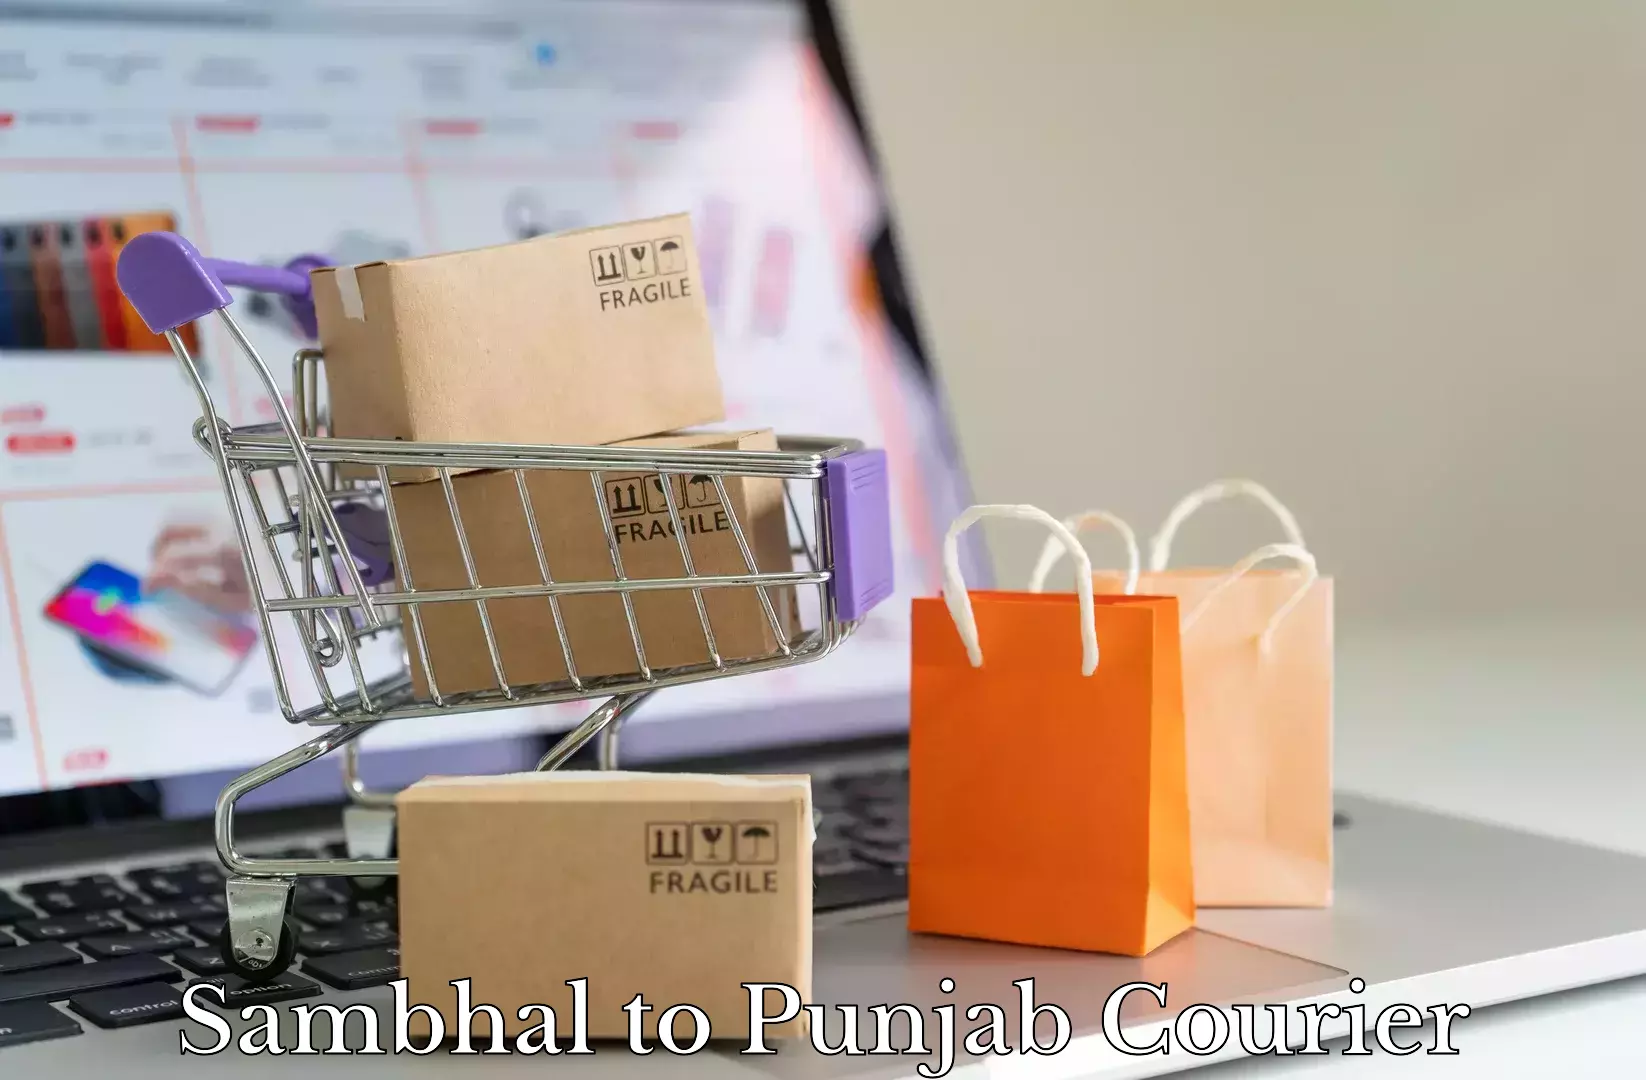 Specialized moving company Sambhal to Mohali